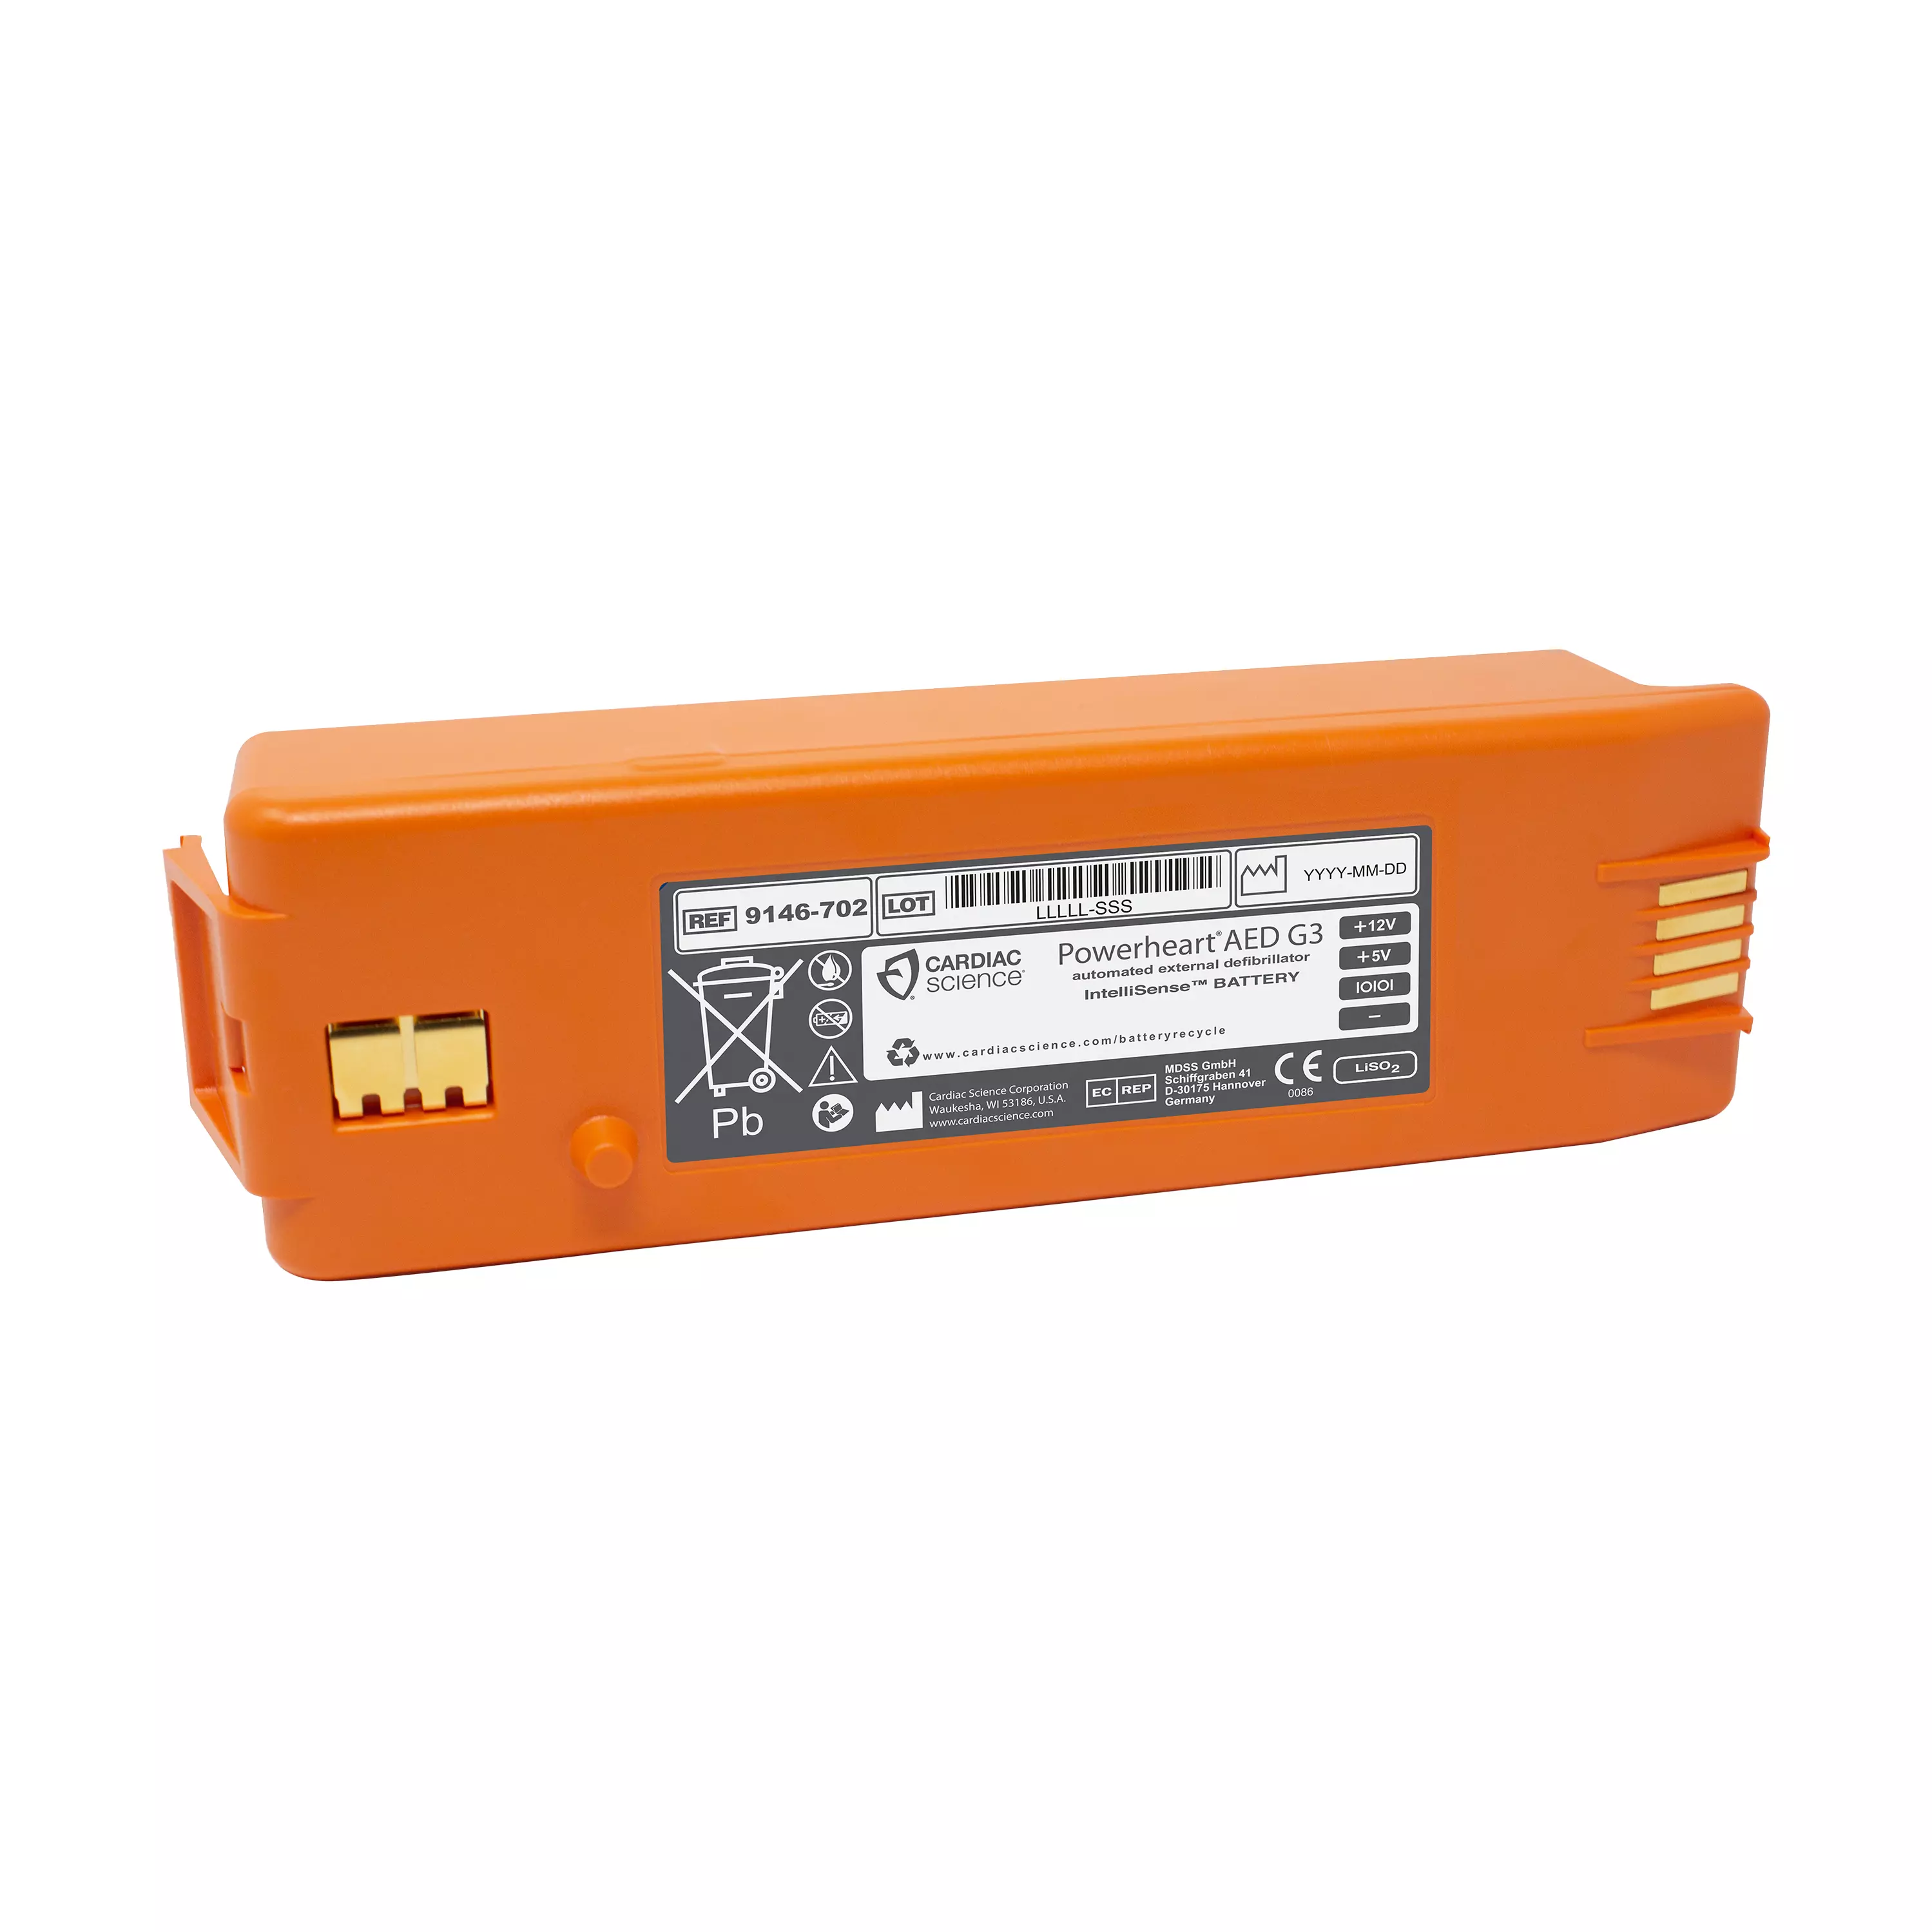 Lithium Batterie für AED Cardiac Science/ZOLL PowerHeart AED G3